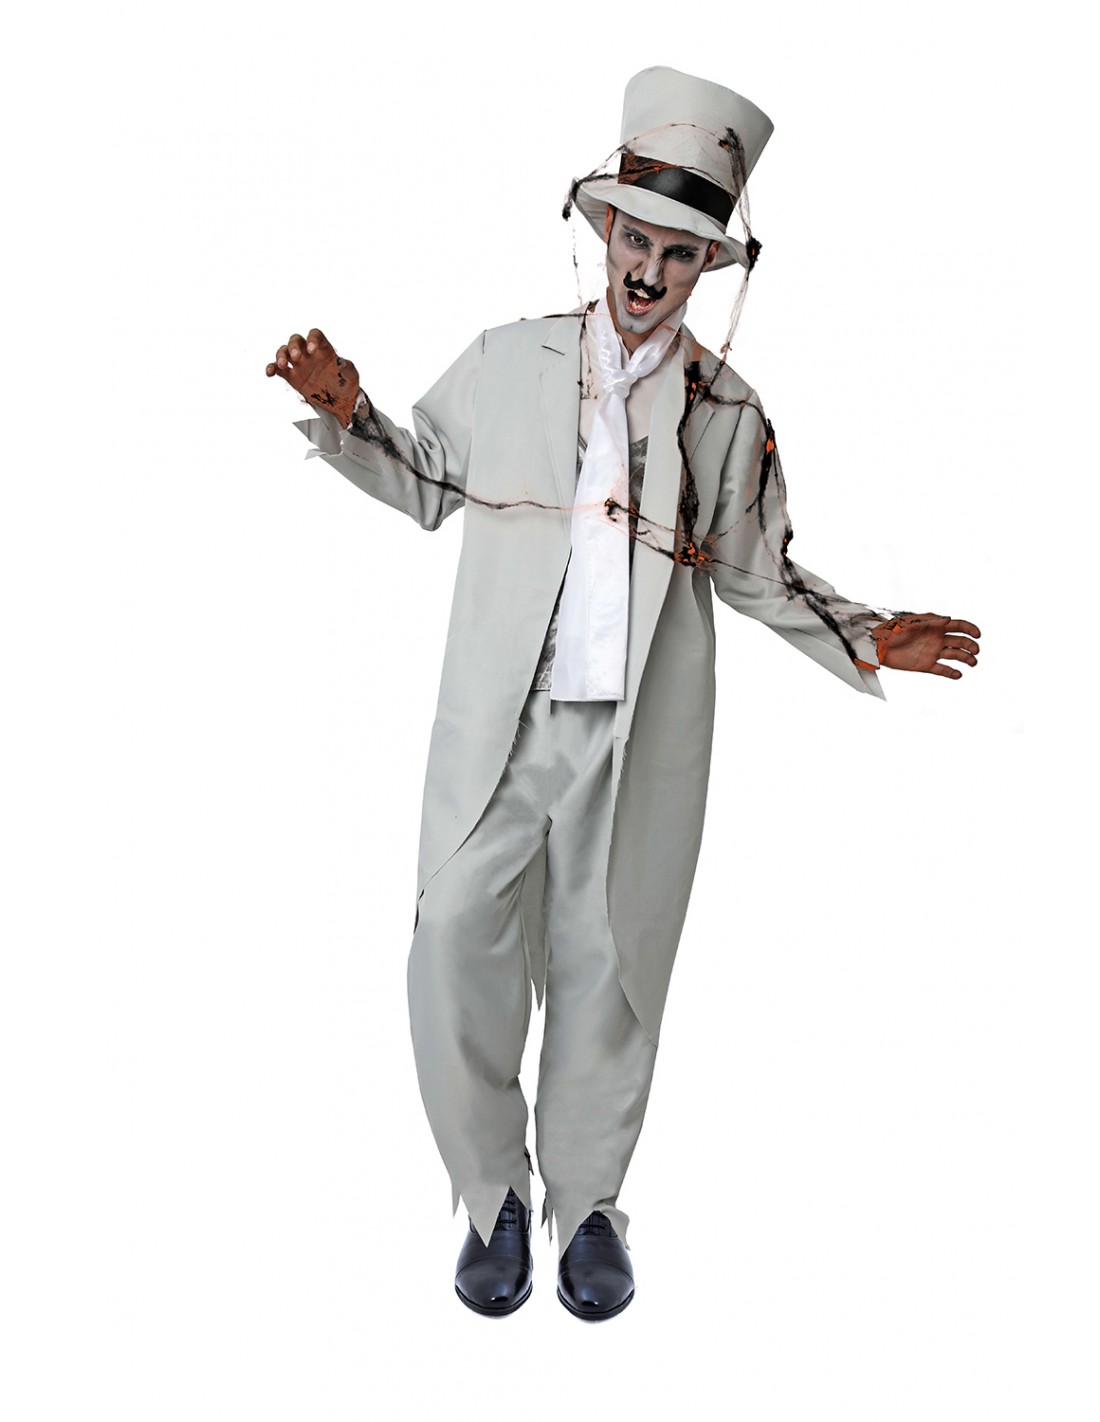 Disfraz fiesta carnaval de disfraces adulto para hombre polyester Halloween